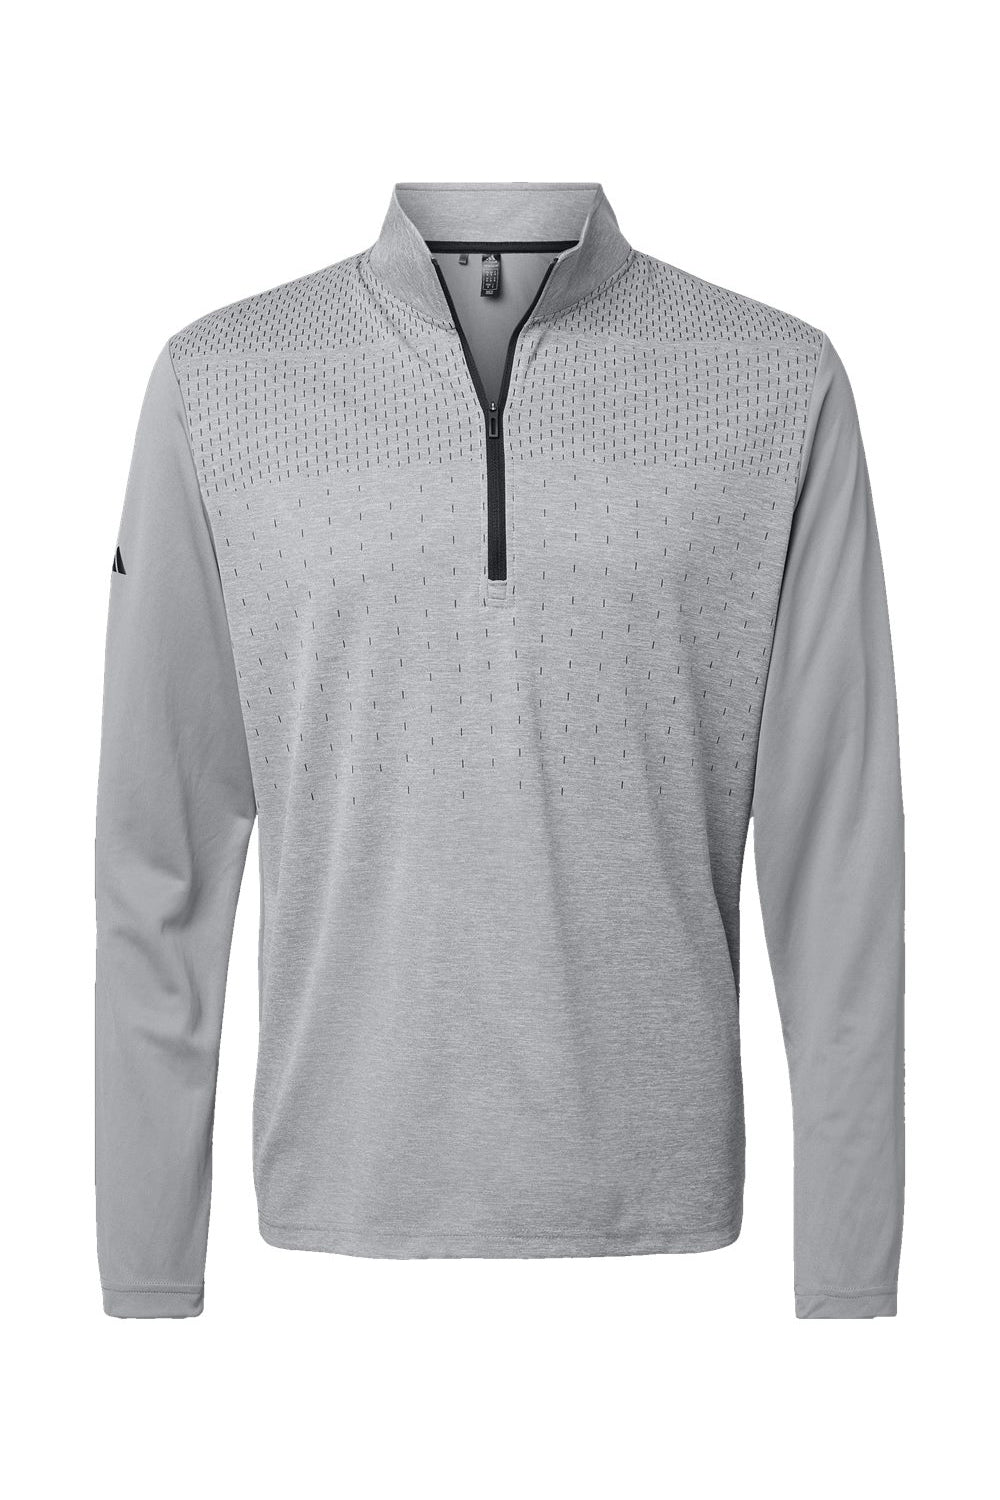 Adidas A522 Mens Heather Block Print Moisture Wicking 1/4 Zip Sweatshirt Grey Melange/Grey/Black Flat Front